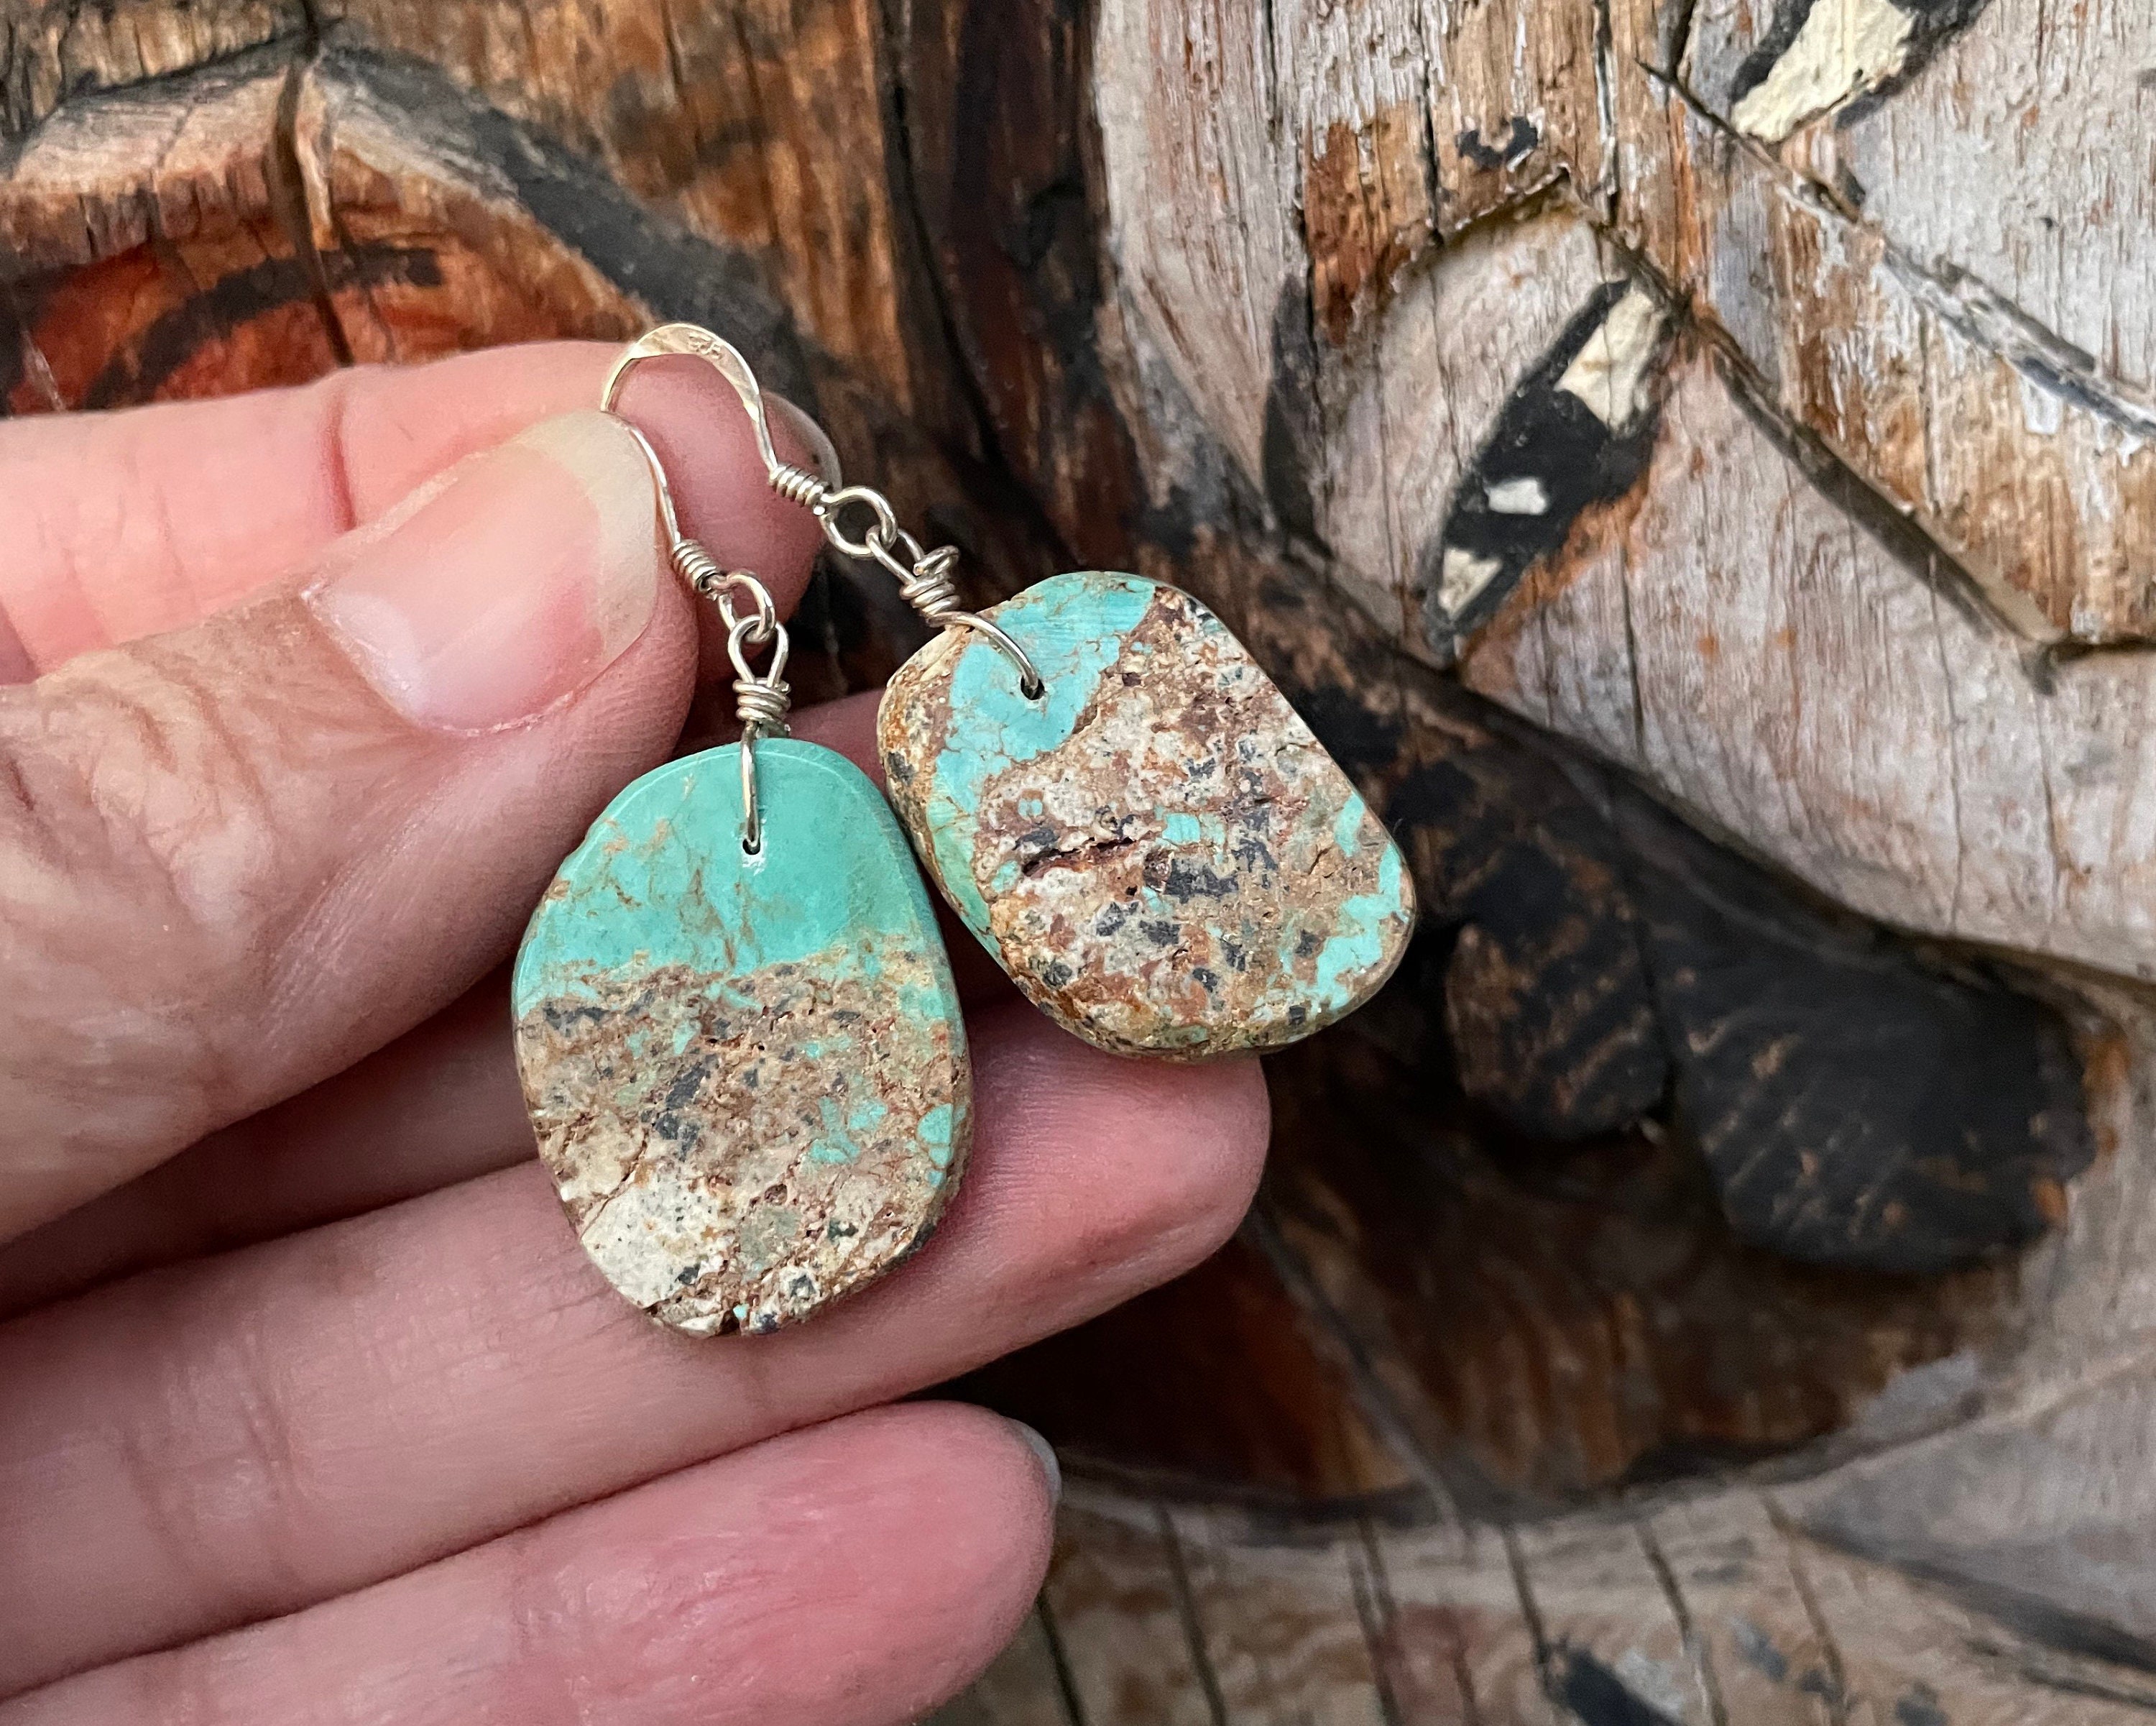 Southwestern Santo Domingo Pueblo Jewelry Green Boulder Turquoise Slab Earrings Medium-Small Size Gift Under 50 Girlfriend Sister Friend